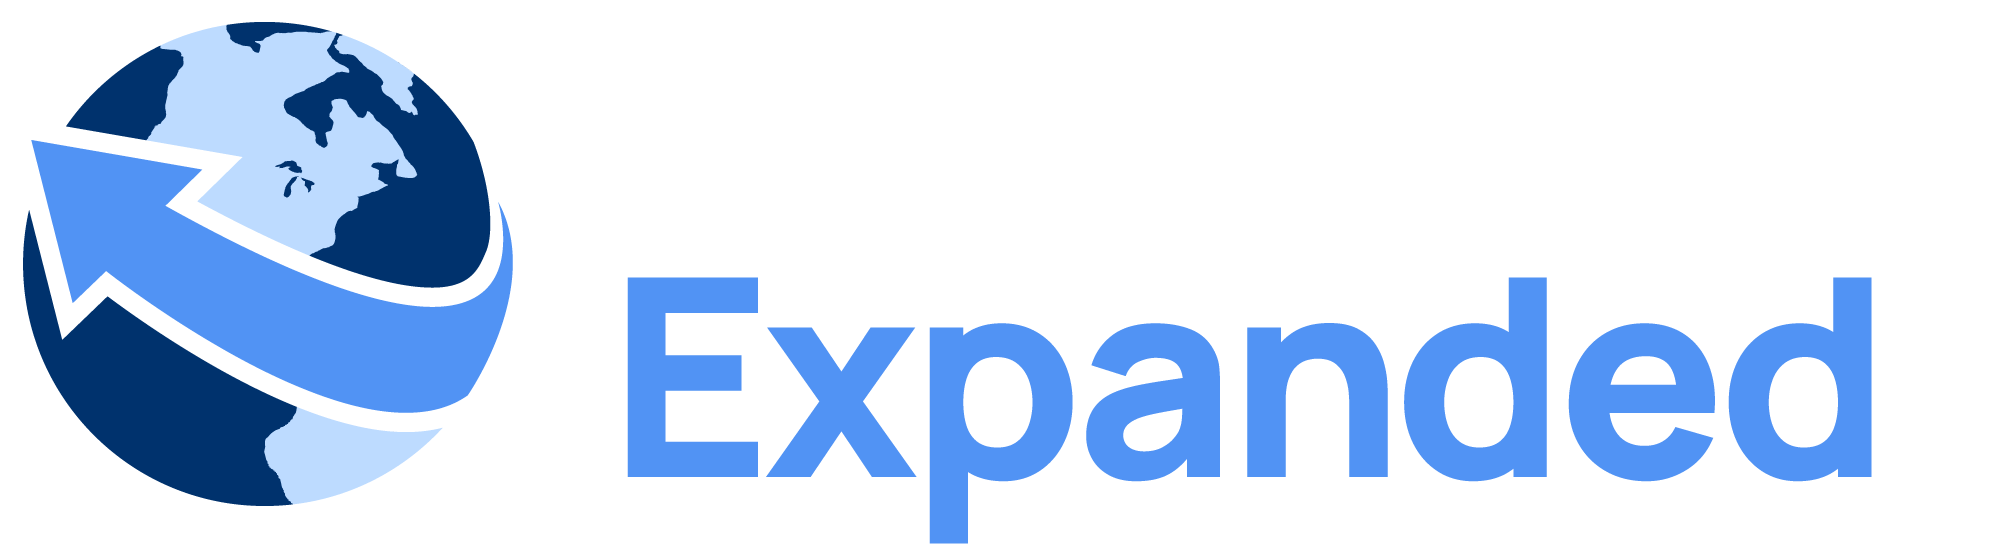 Broadband Expanded